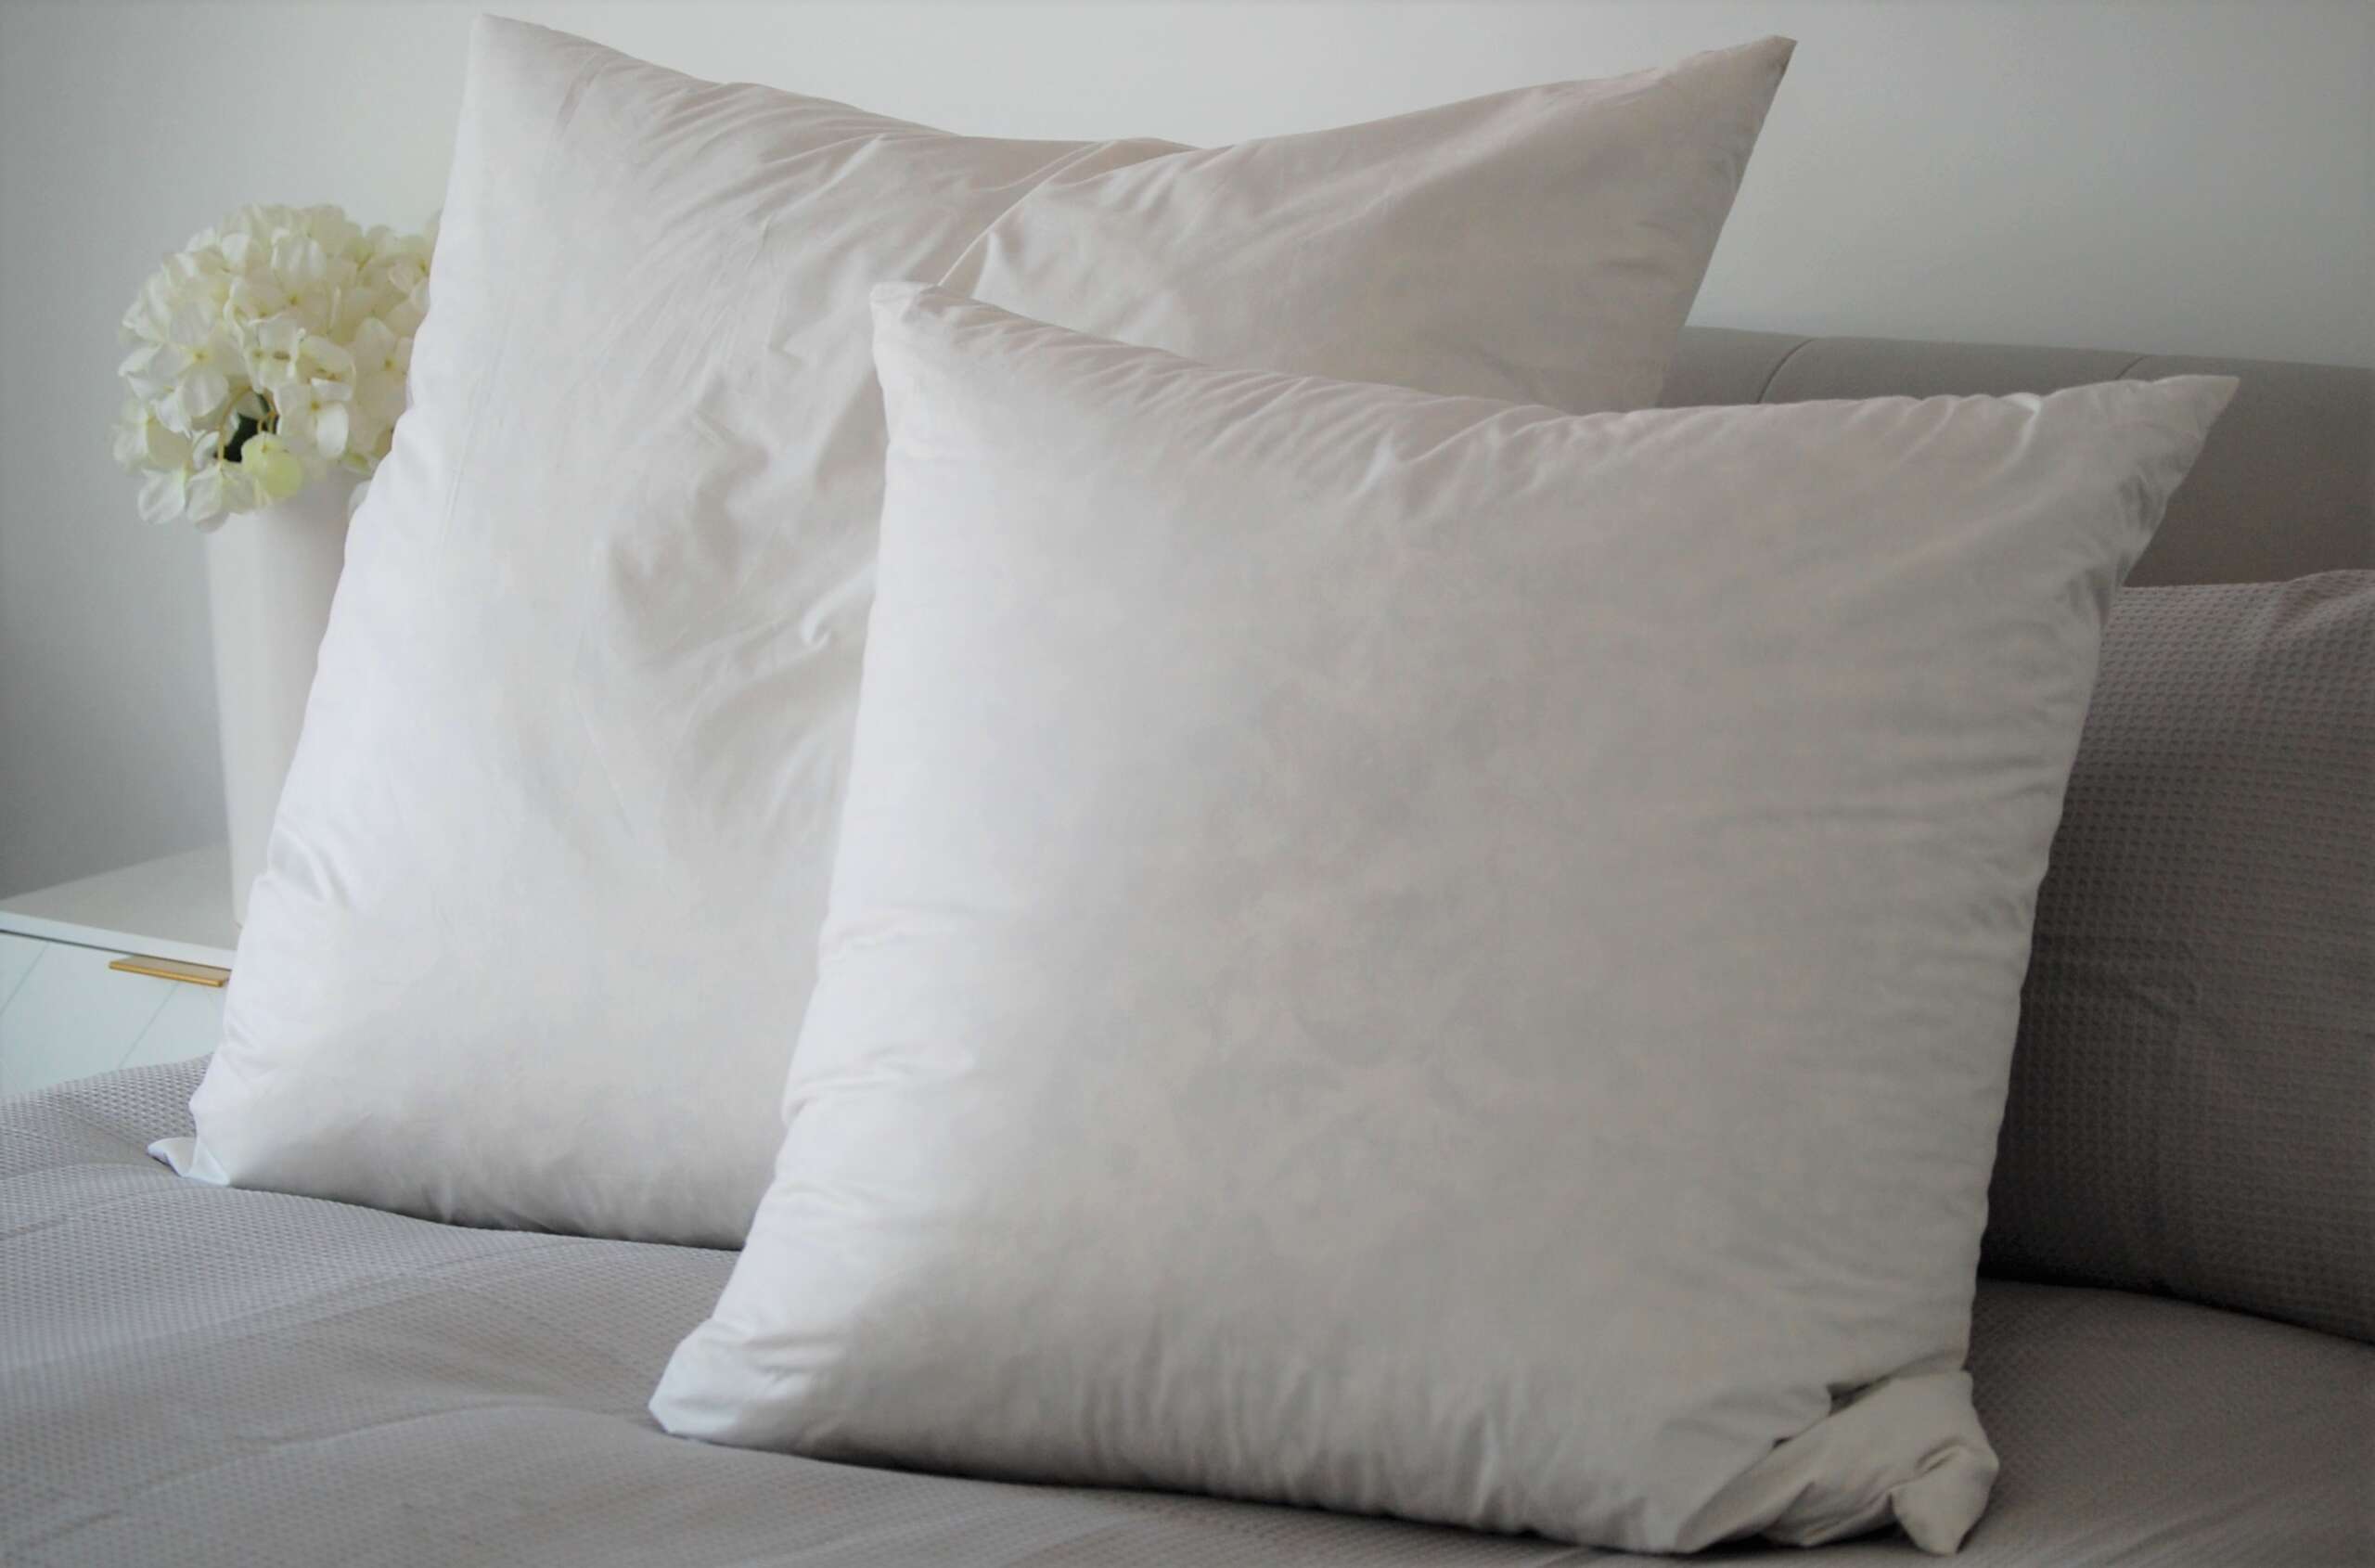 Polyfibre Continental pillow – The Quilt & Pillow Factory